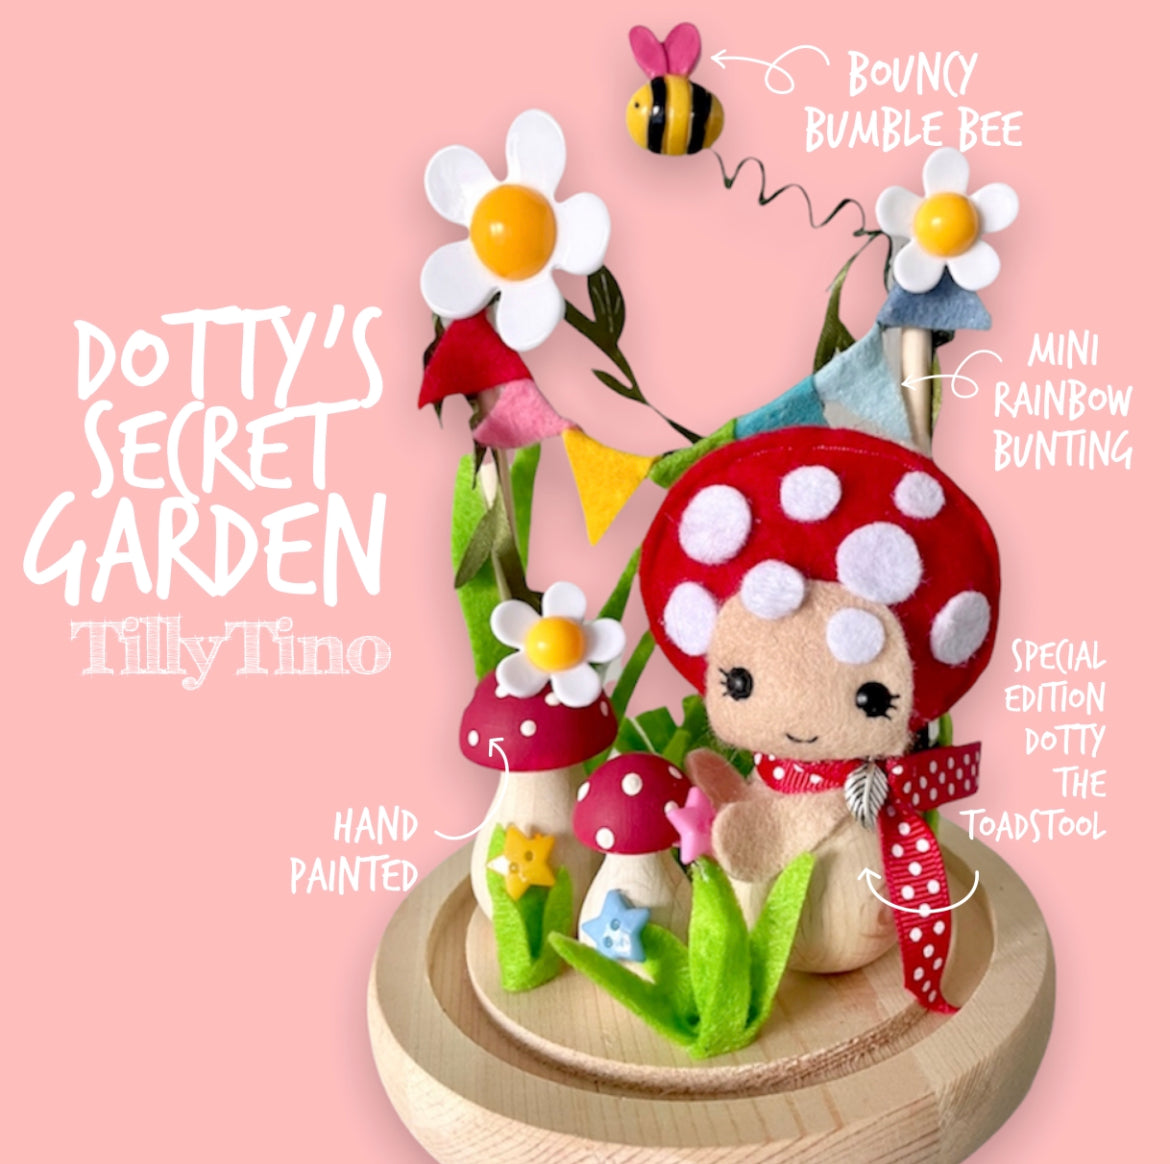 Dotty’s Secret Garden 